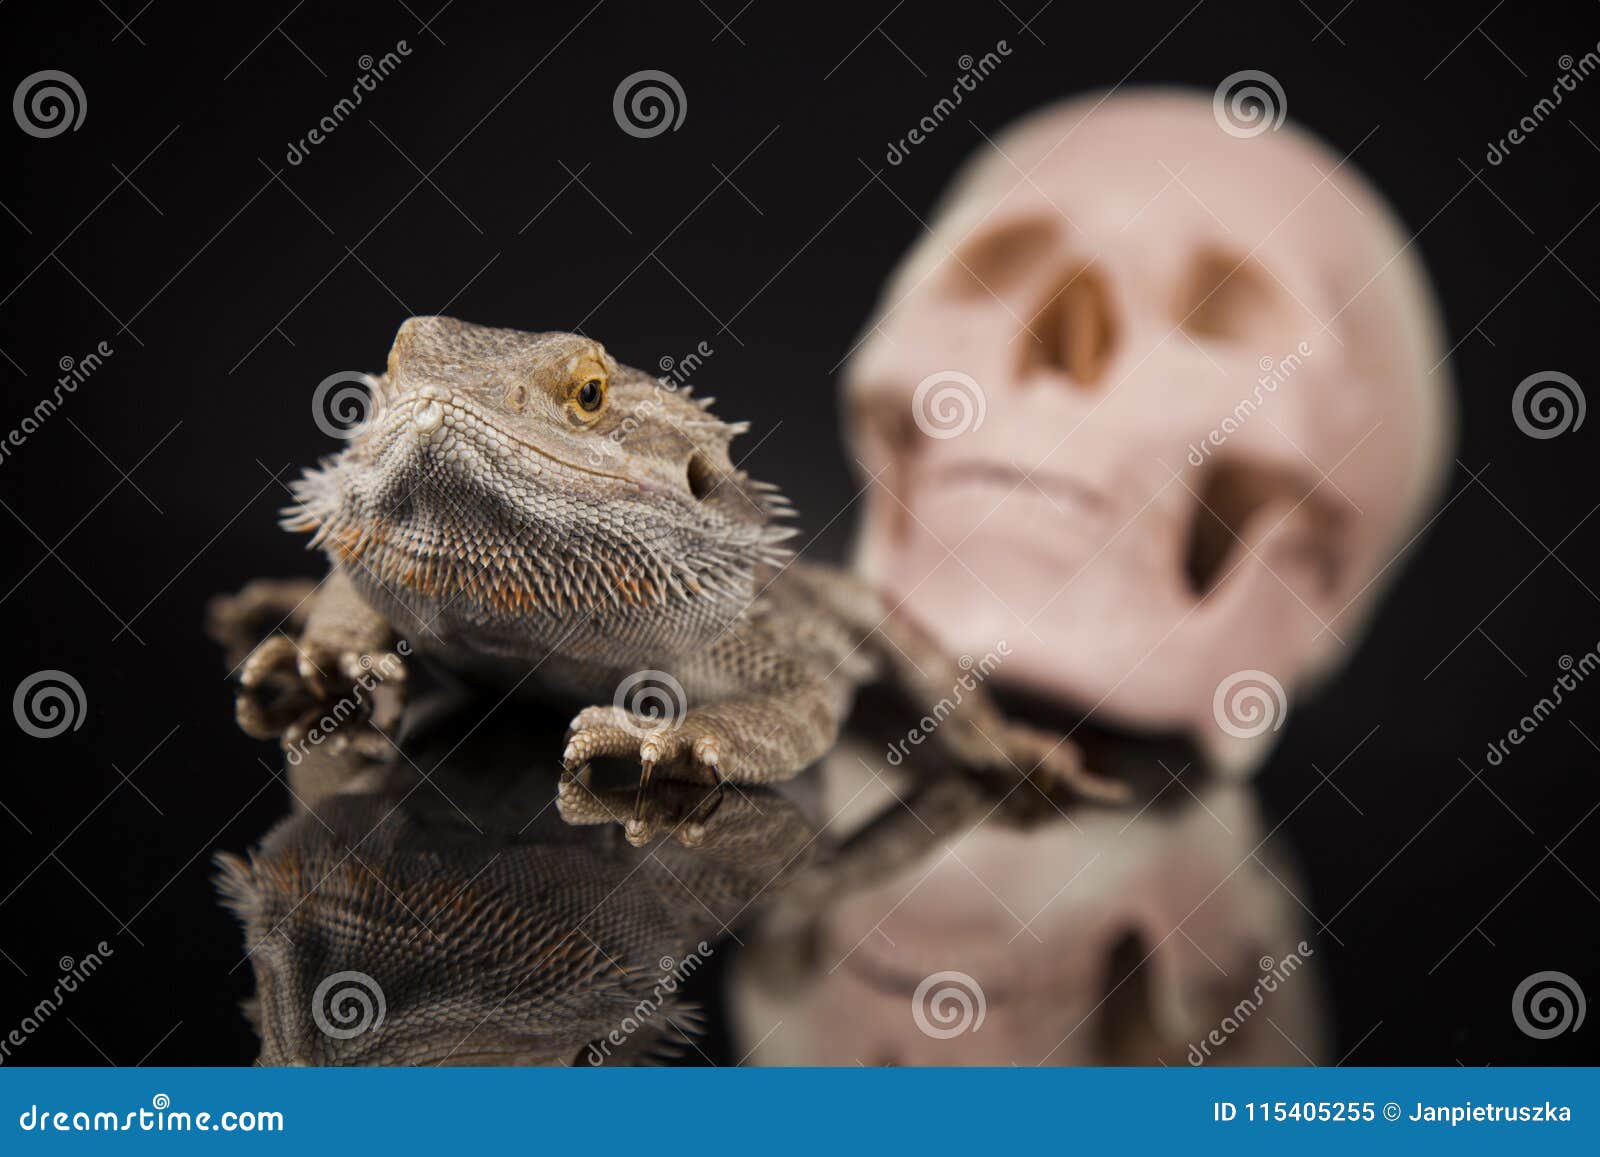 Human Skull,Agama Bearded, Lizard Background Stock Image - Image of ...